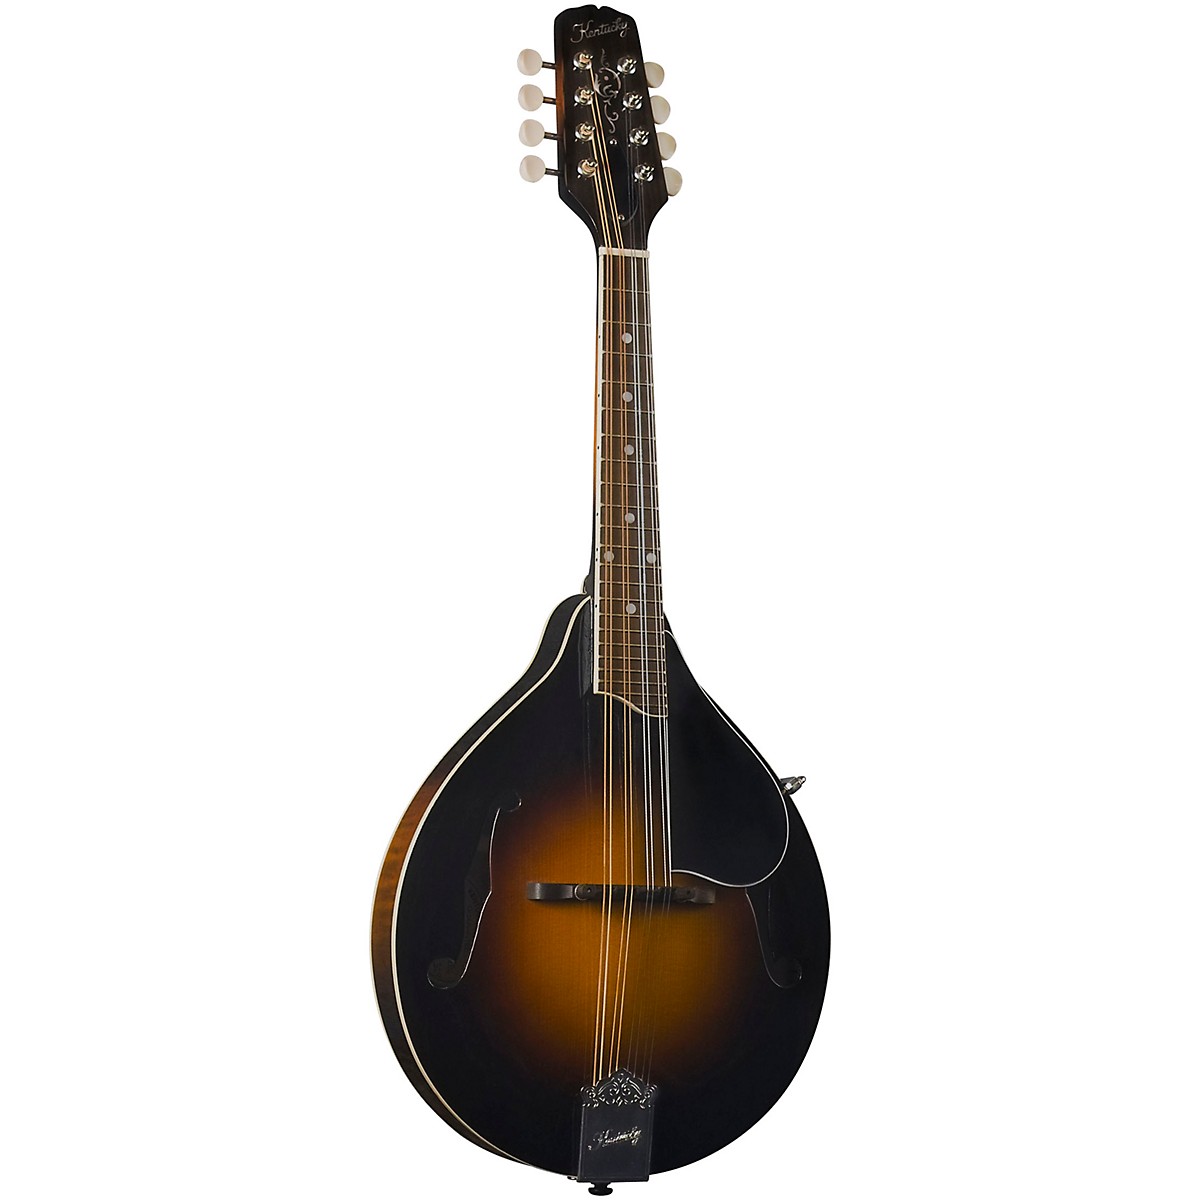 kentucky mandolin review